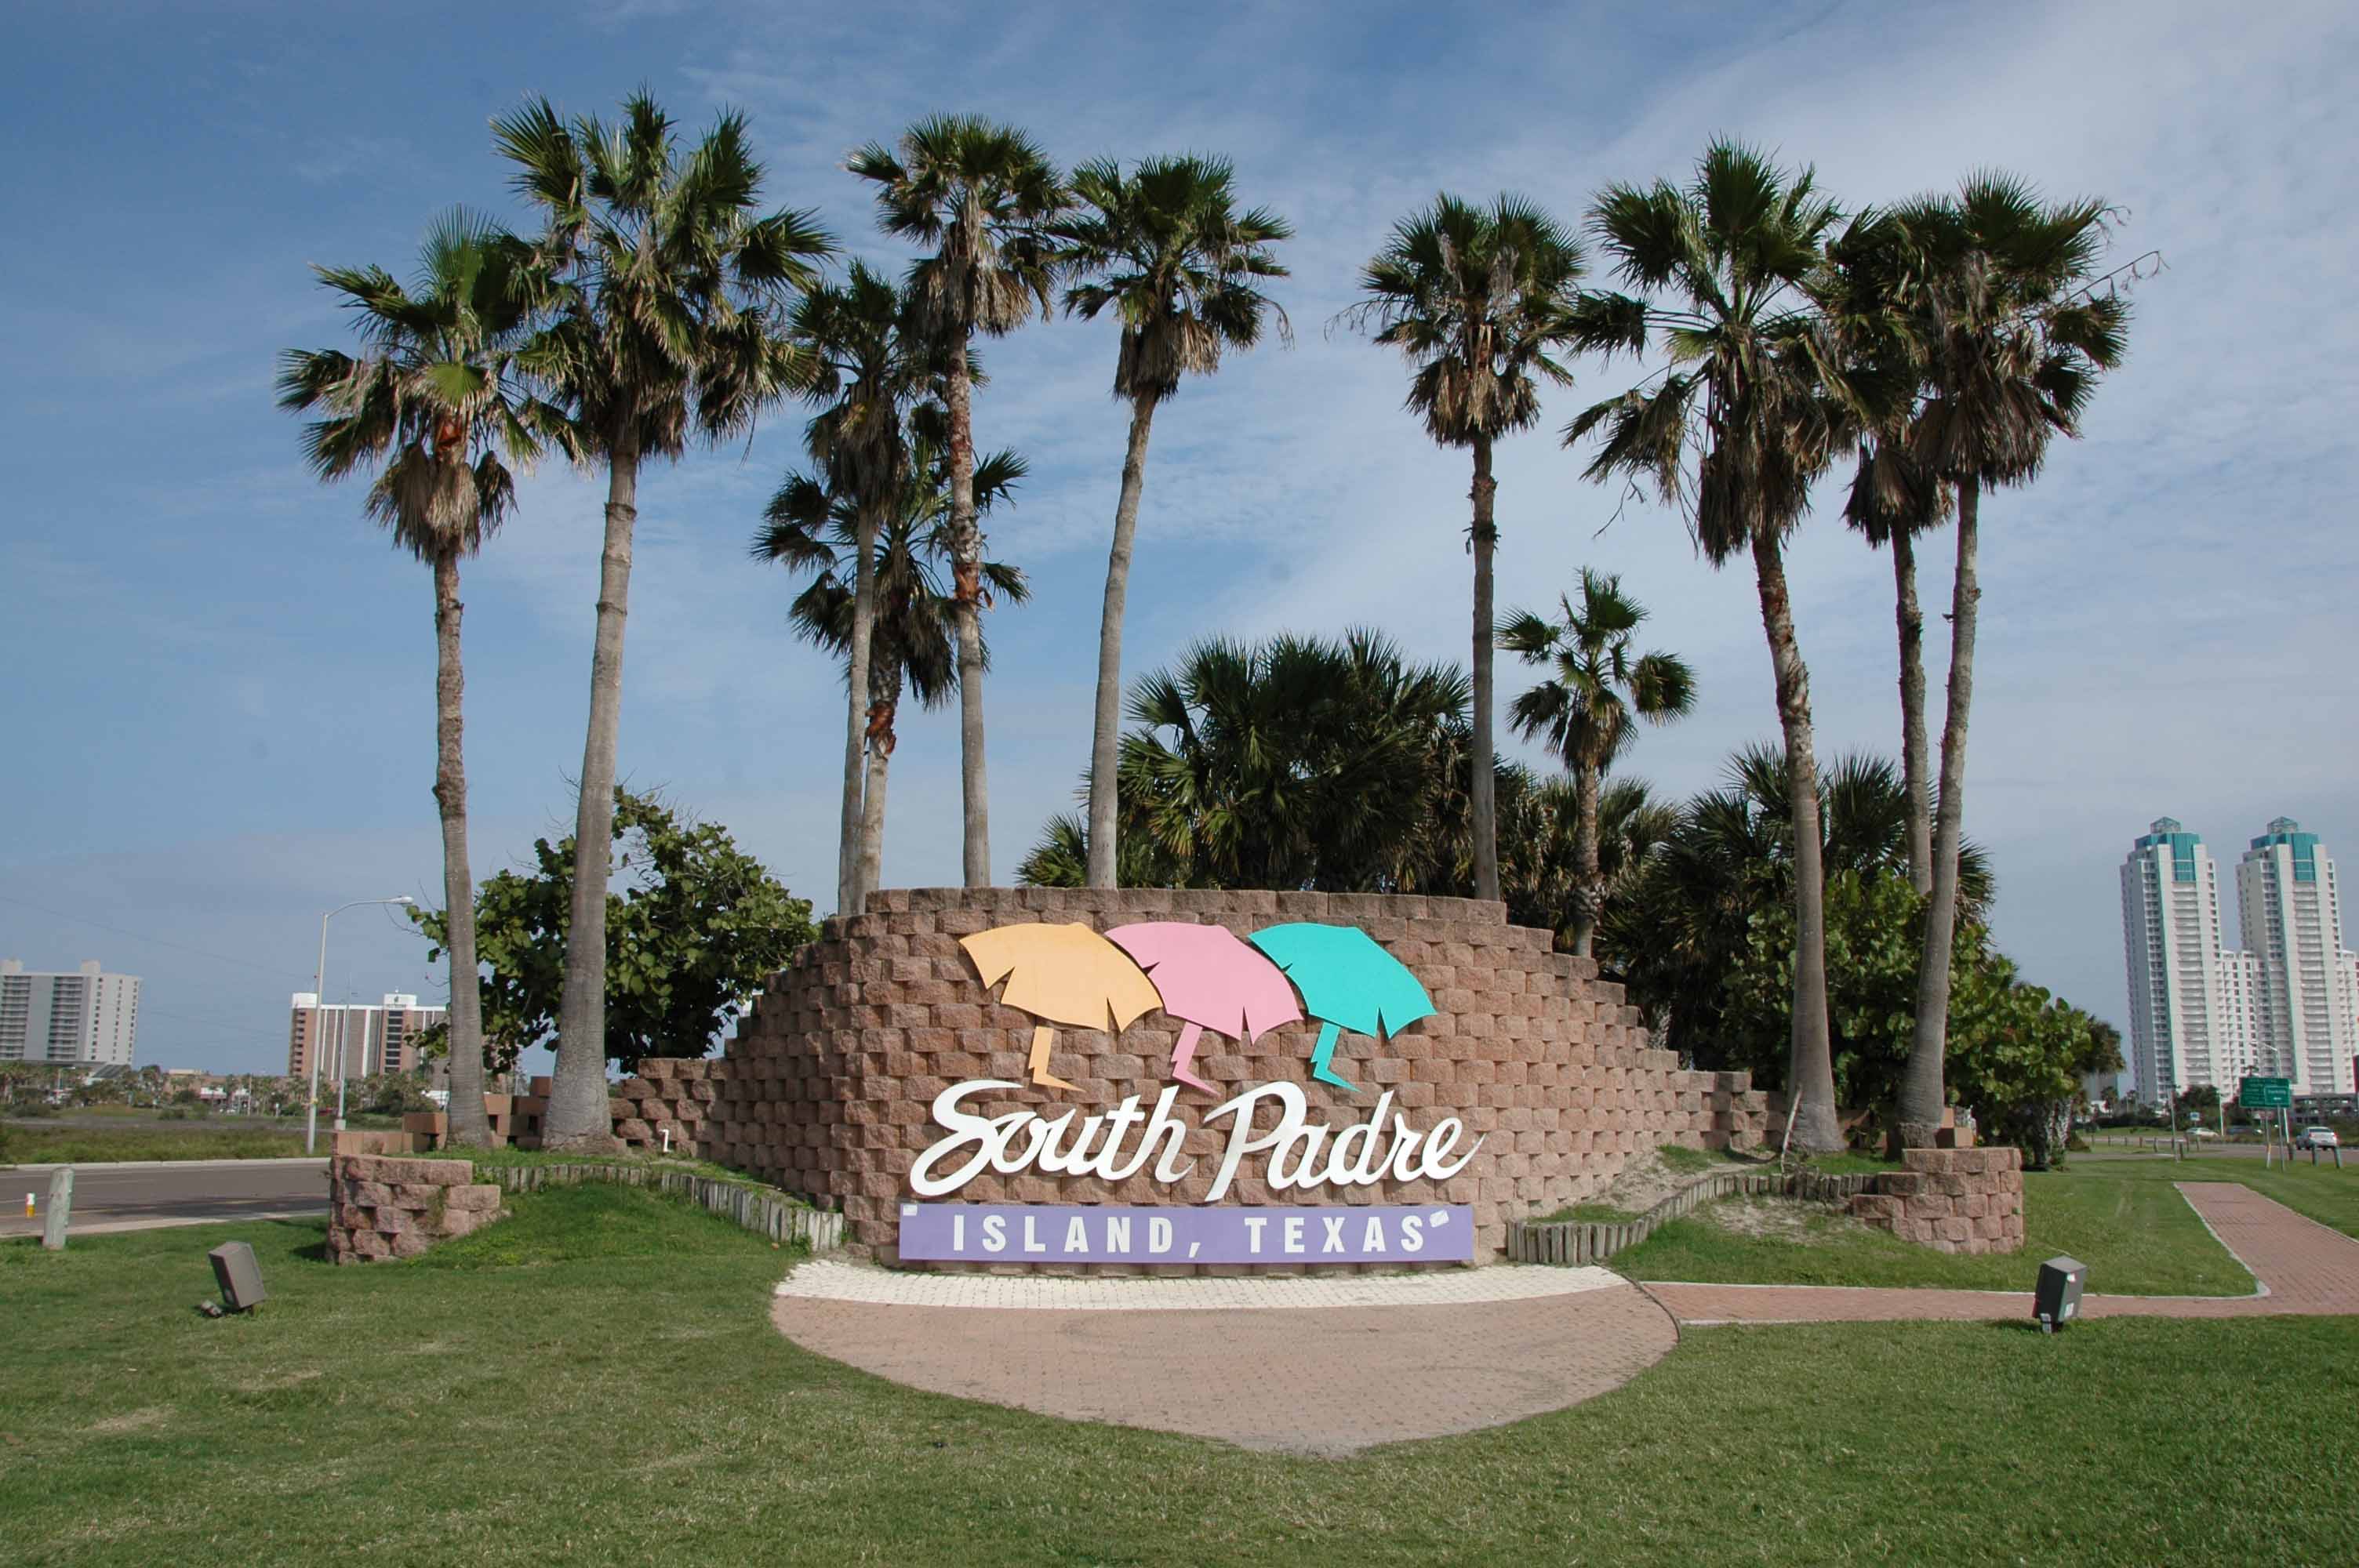 south-padre-island-city-sign.jpg